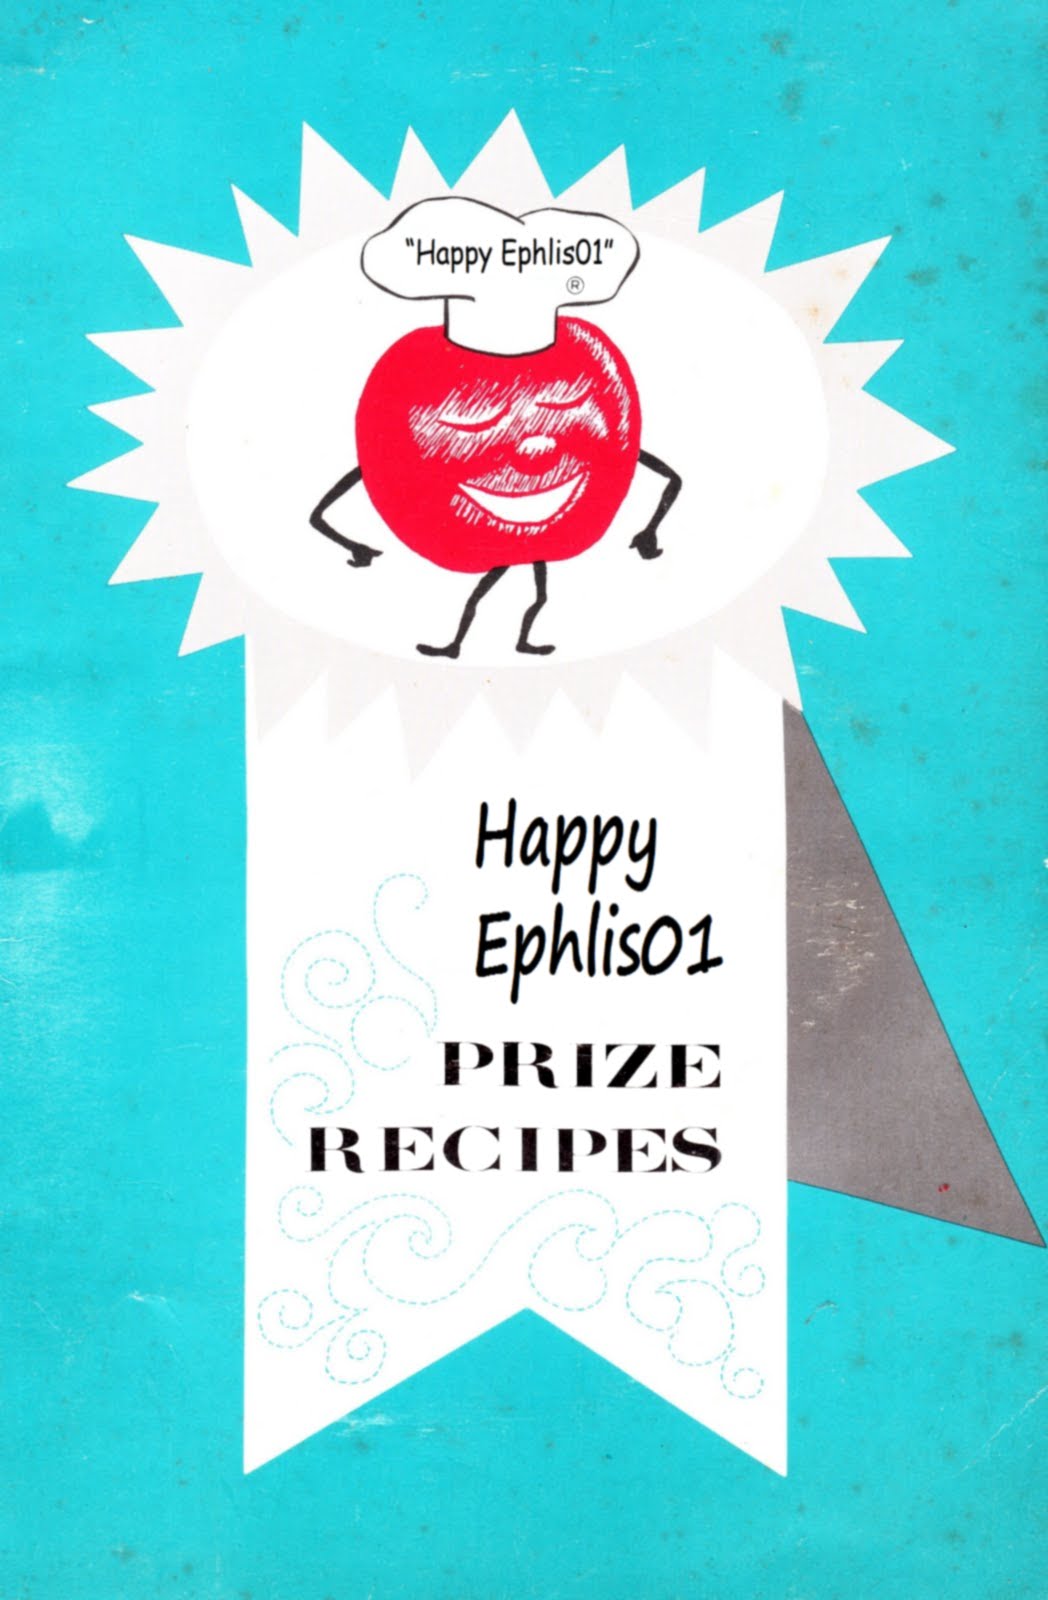 HAPPY EPHLIS01 RECIPES.jpg